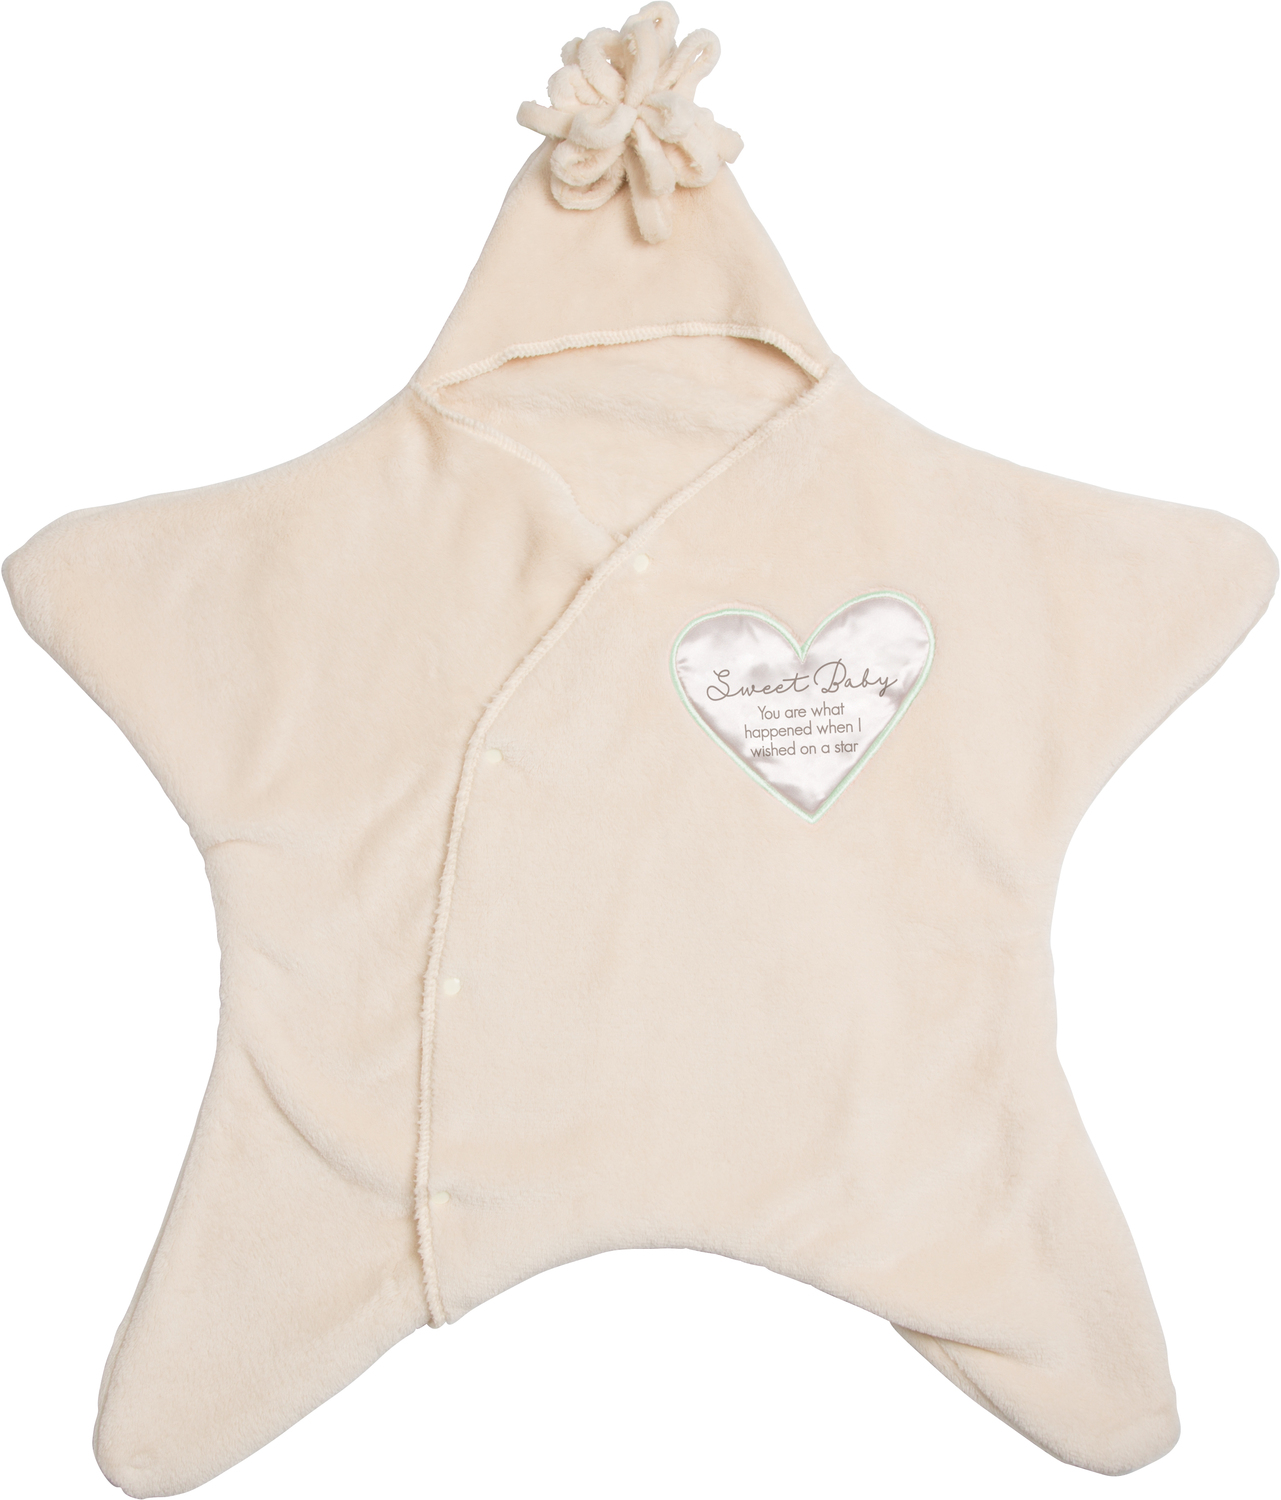 Sweet Baby Star by Comfort Blanket - Sweet Baby Star - 26" x 28" Star Comfort Snuggler